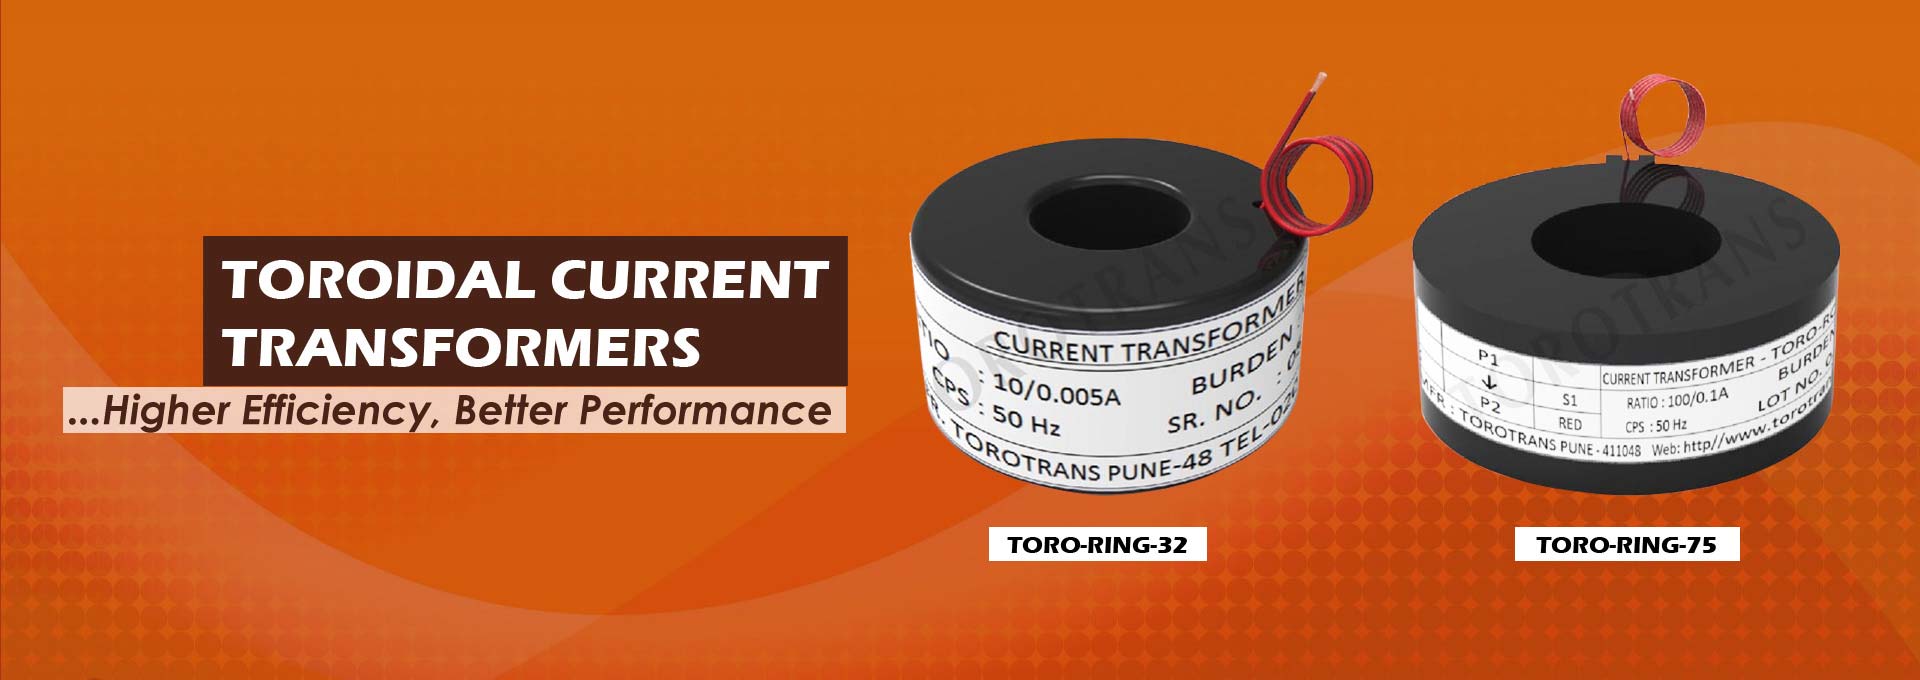 Low Voltage Toroidal Transformer Manufacturers